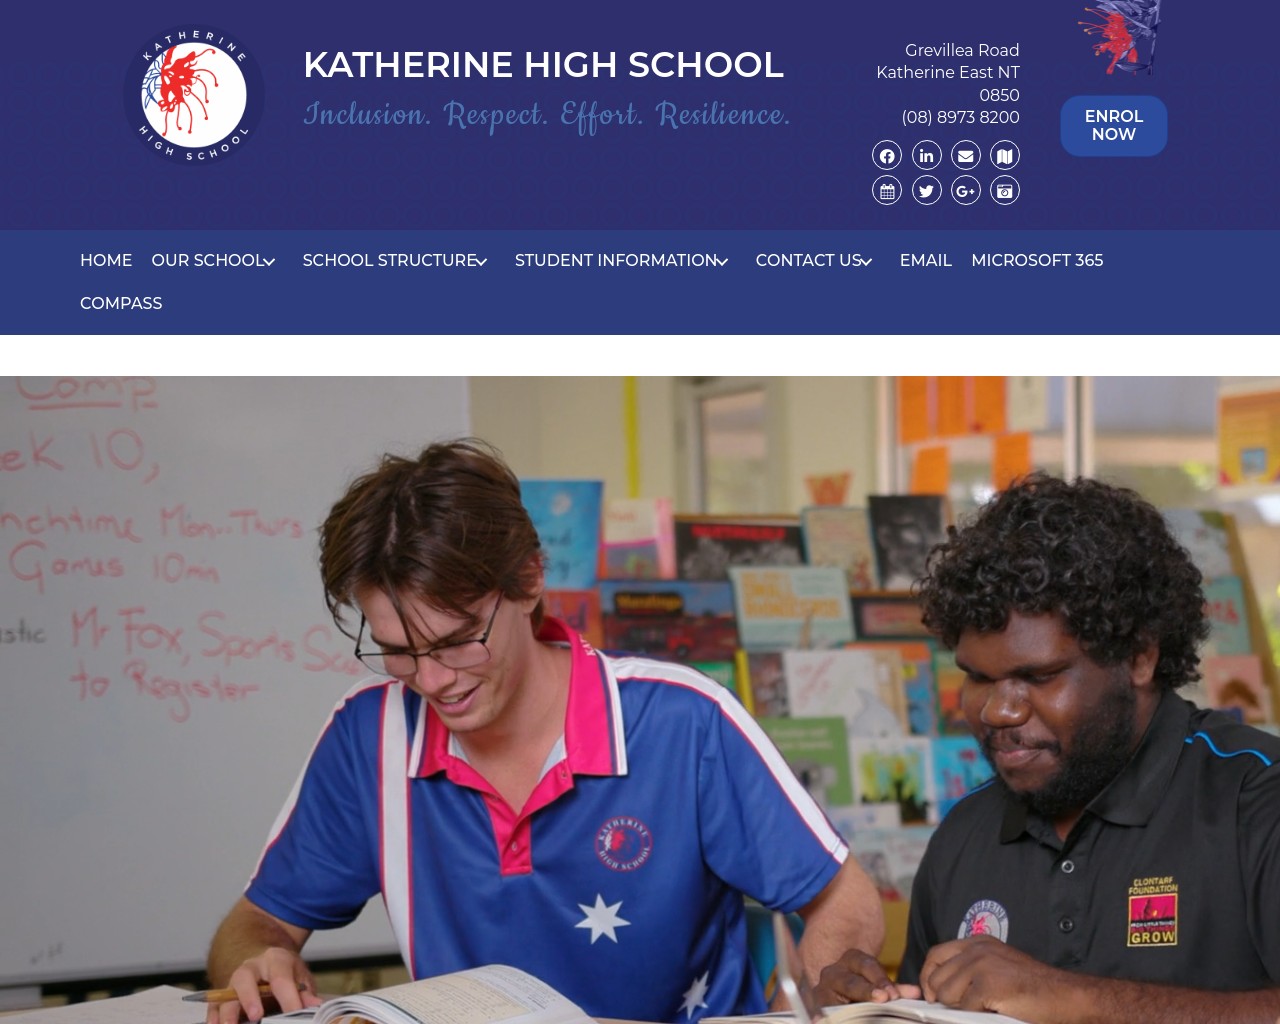 Katherine High School